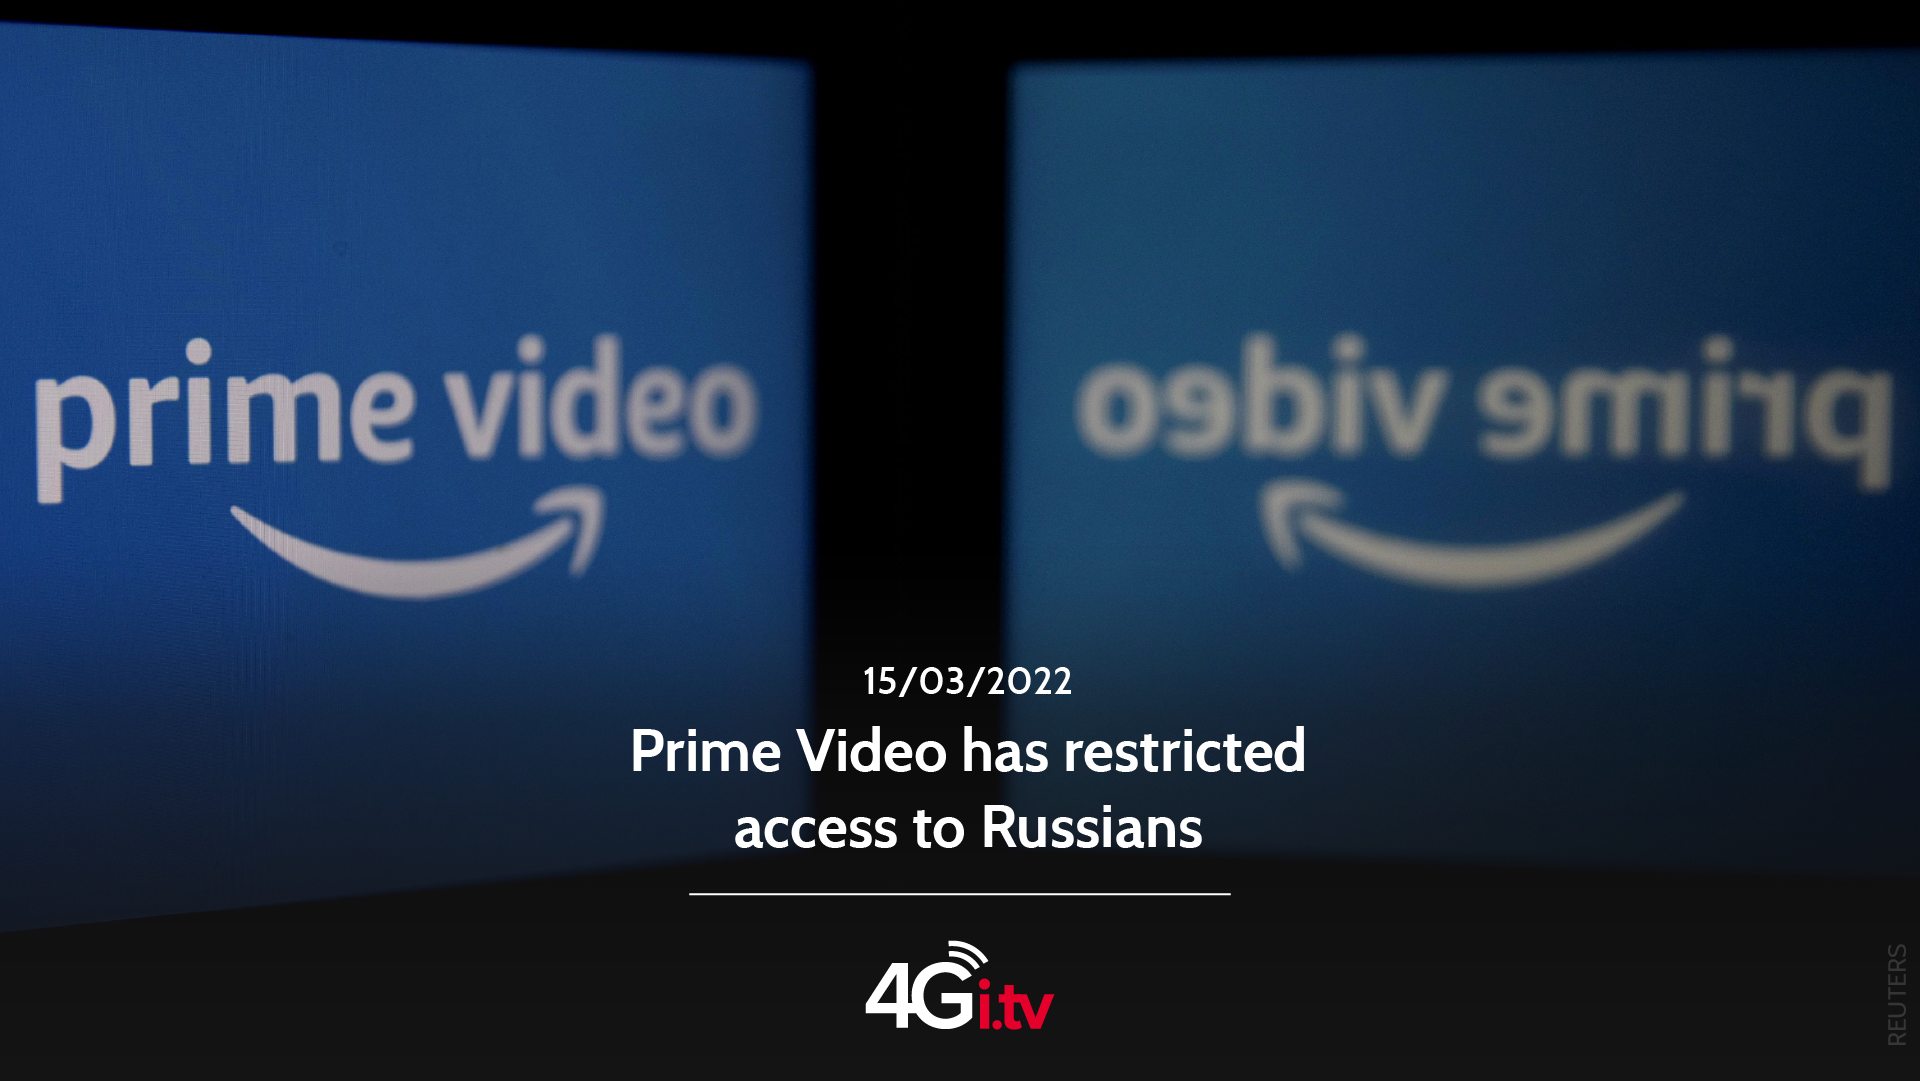 Подробнее о статье Prime Video has restricted access to Russians